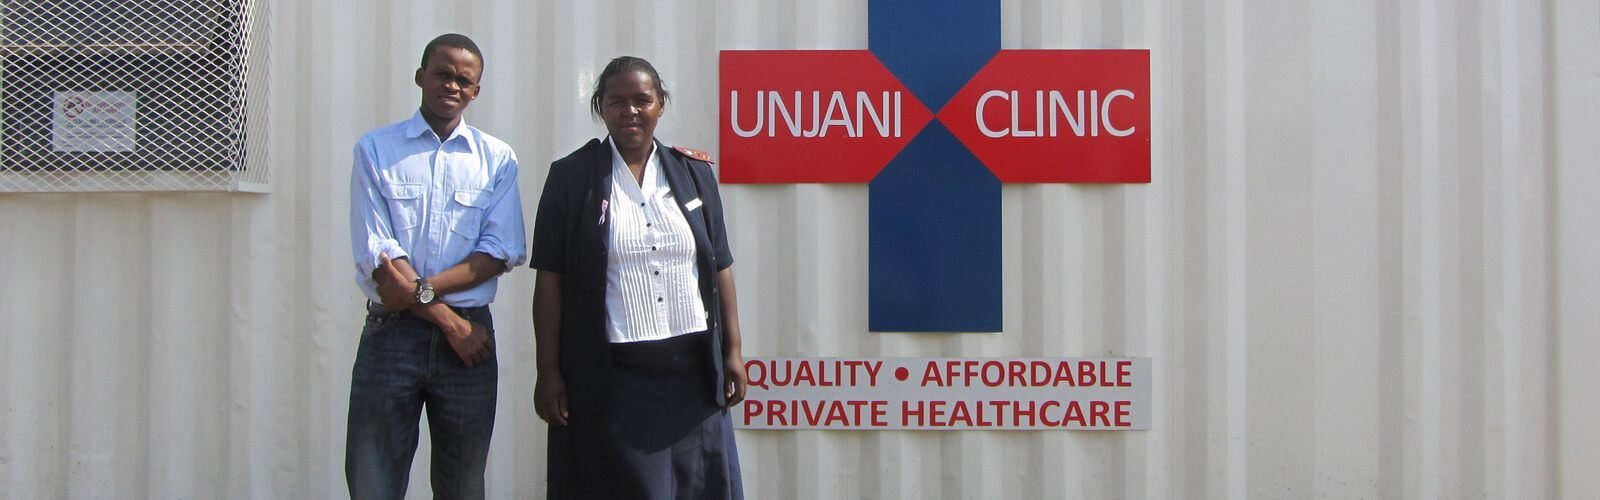 Photo: Unjani Clinics